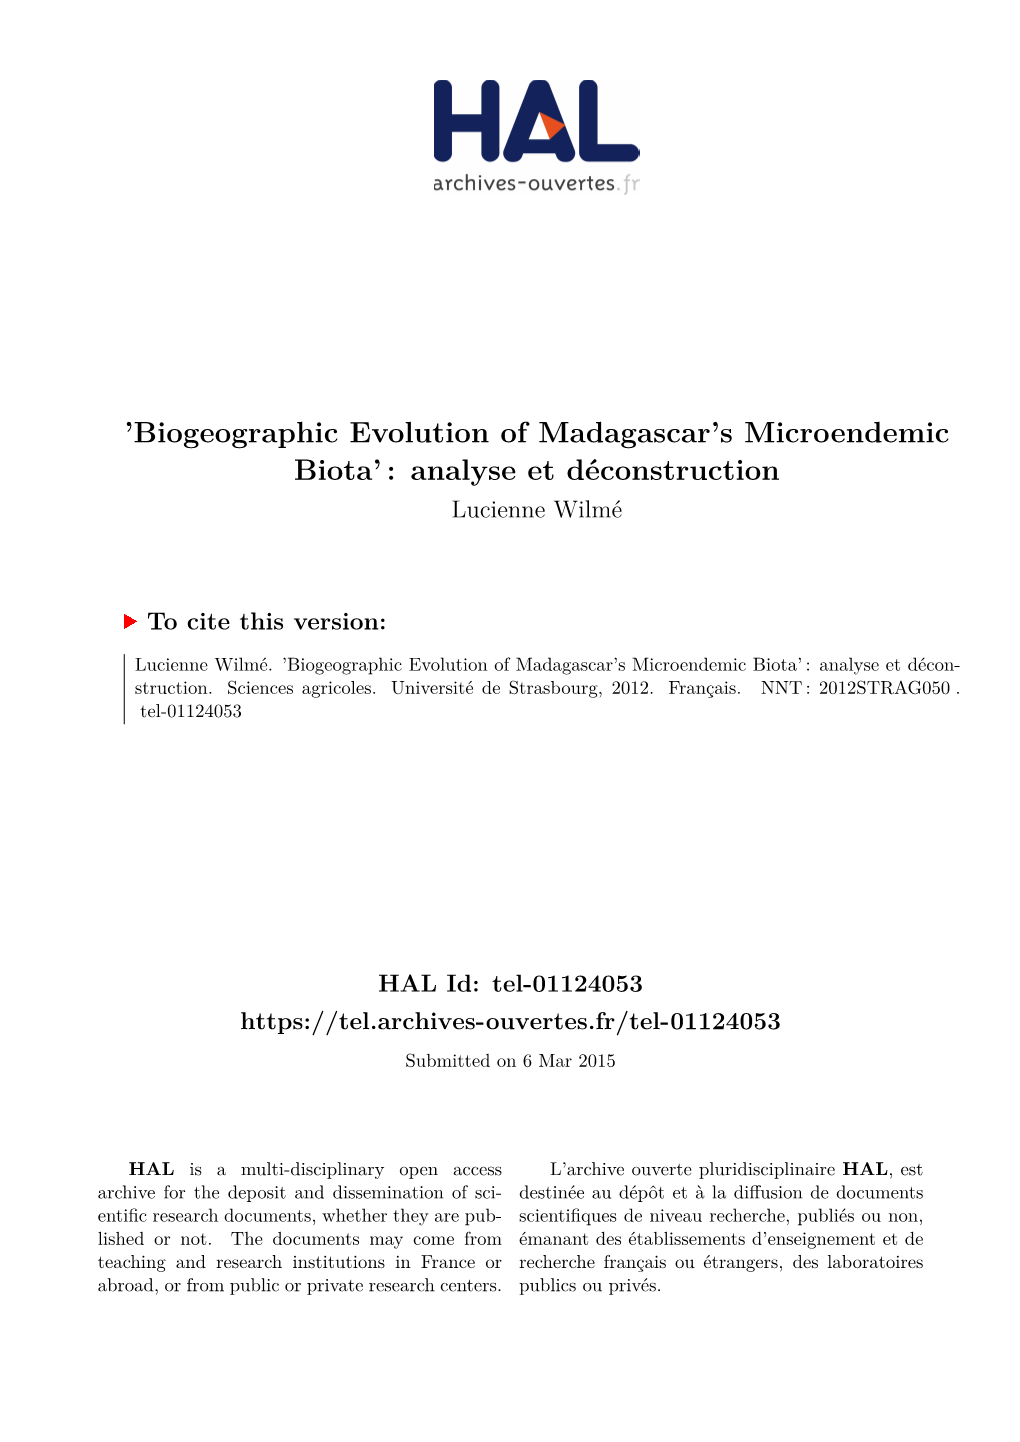 'Biogeographic Evolution of Madagascar's Microendemic Biota'